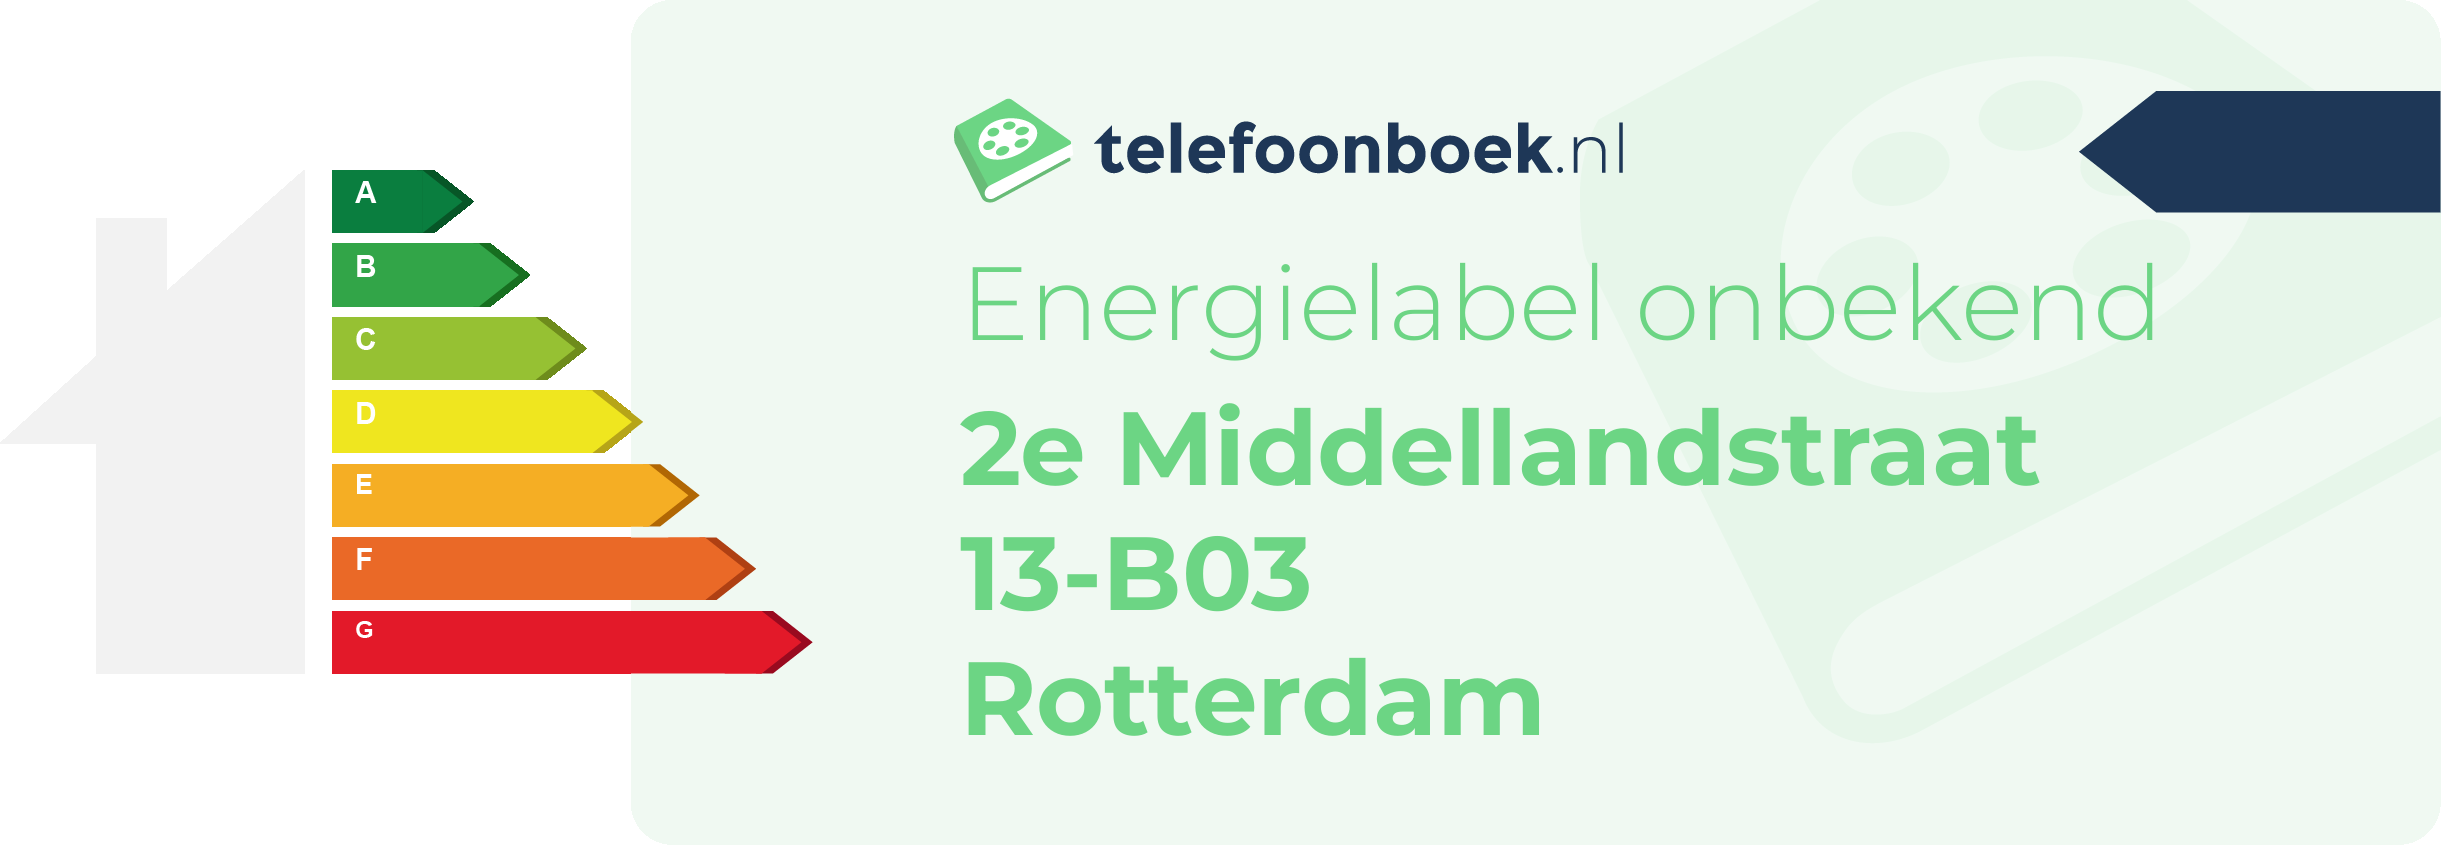 Energielabel 2e Middellandstraat 13-B03 Rotterdam